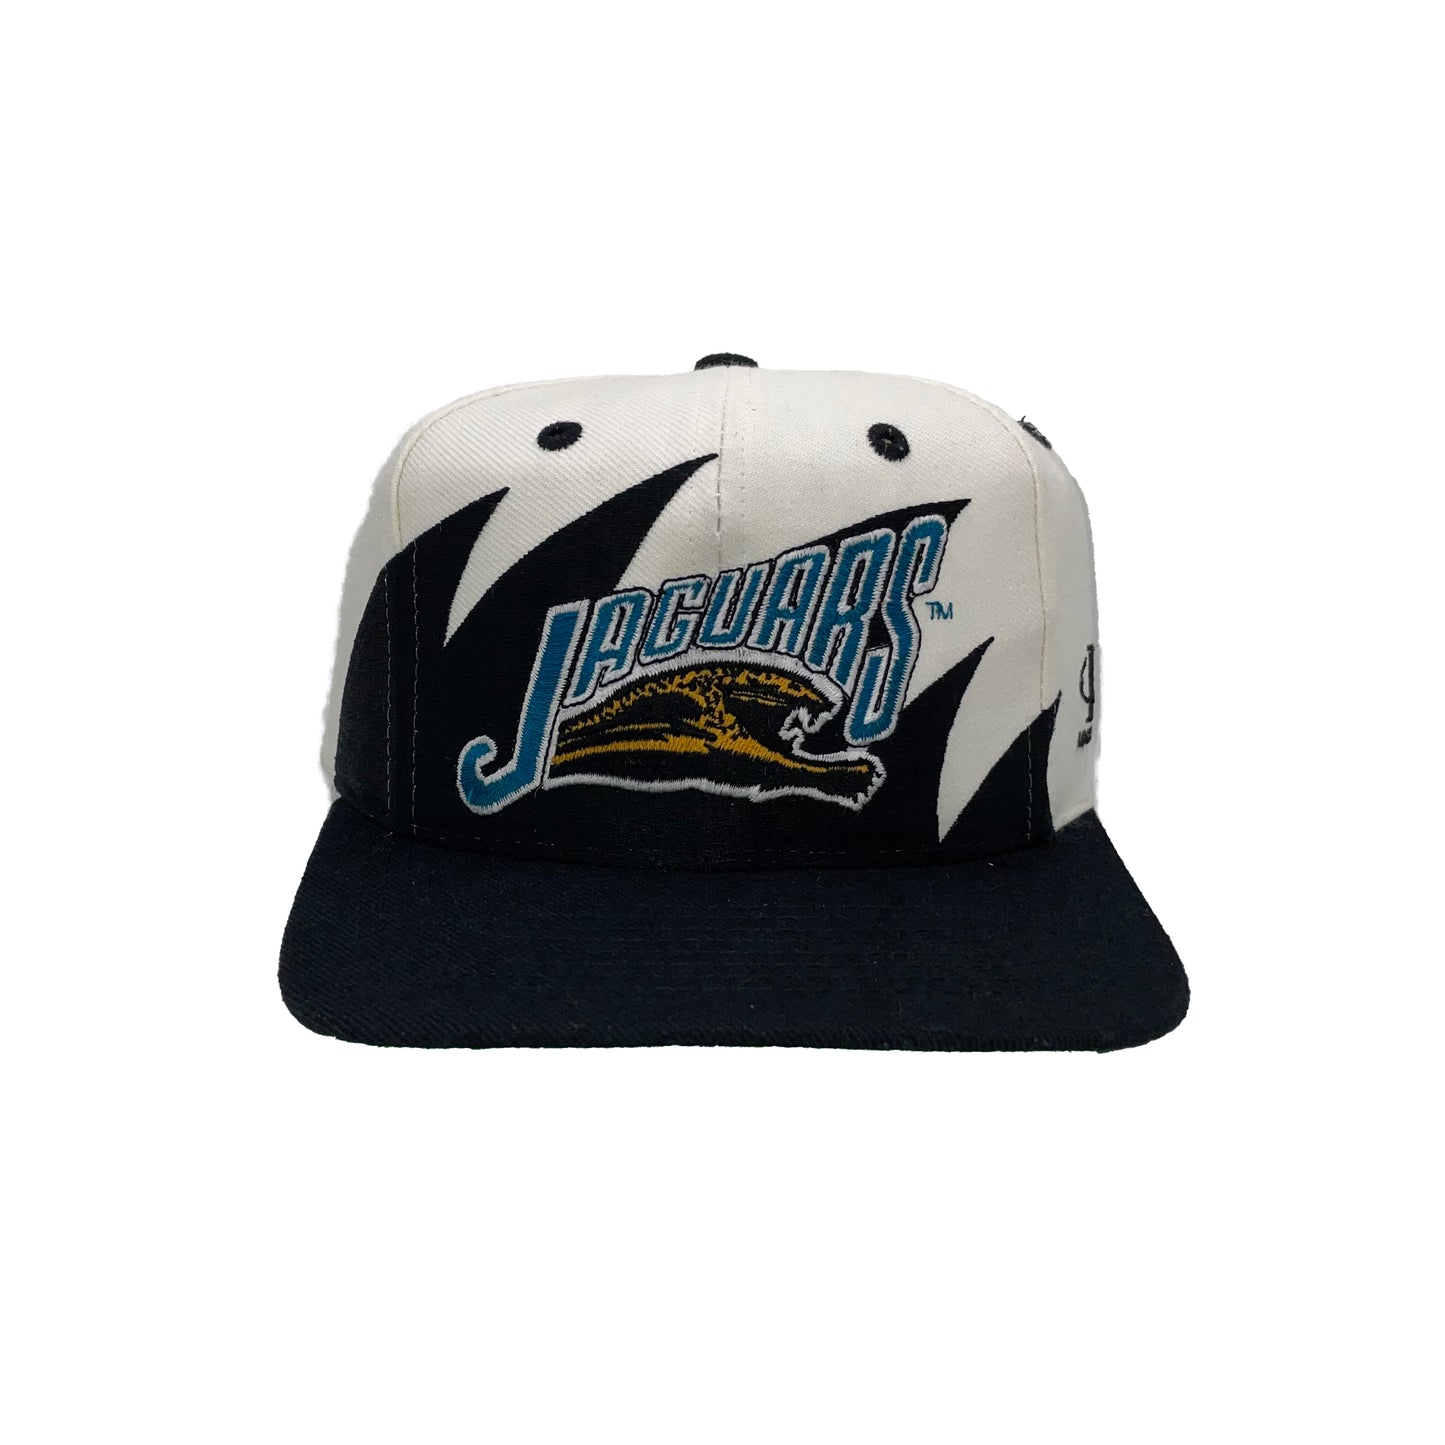 Vintage Jacksonville Jaguars LOGO ATHLETIC "Sharktooth" hat